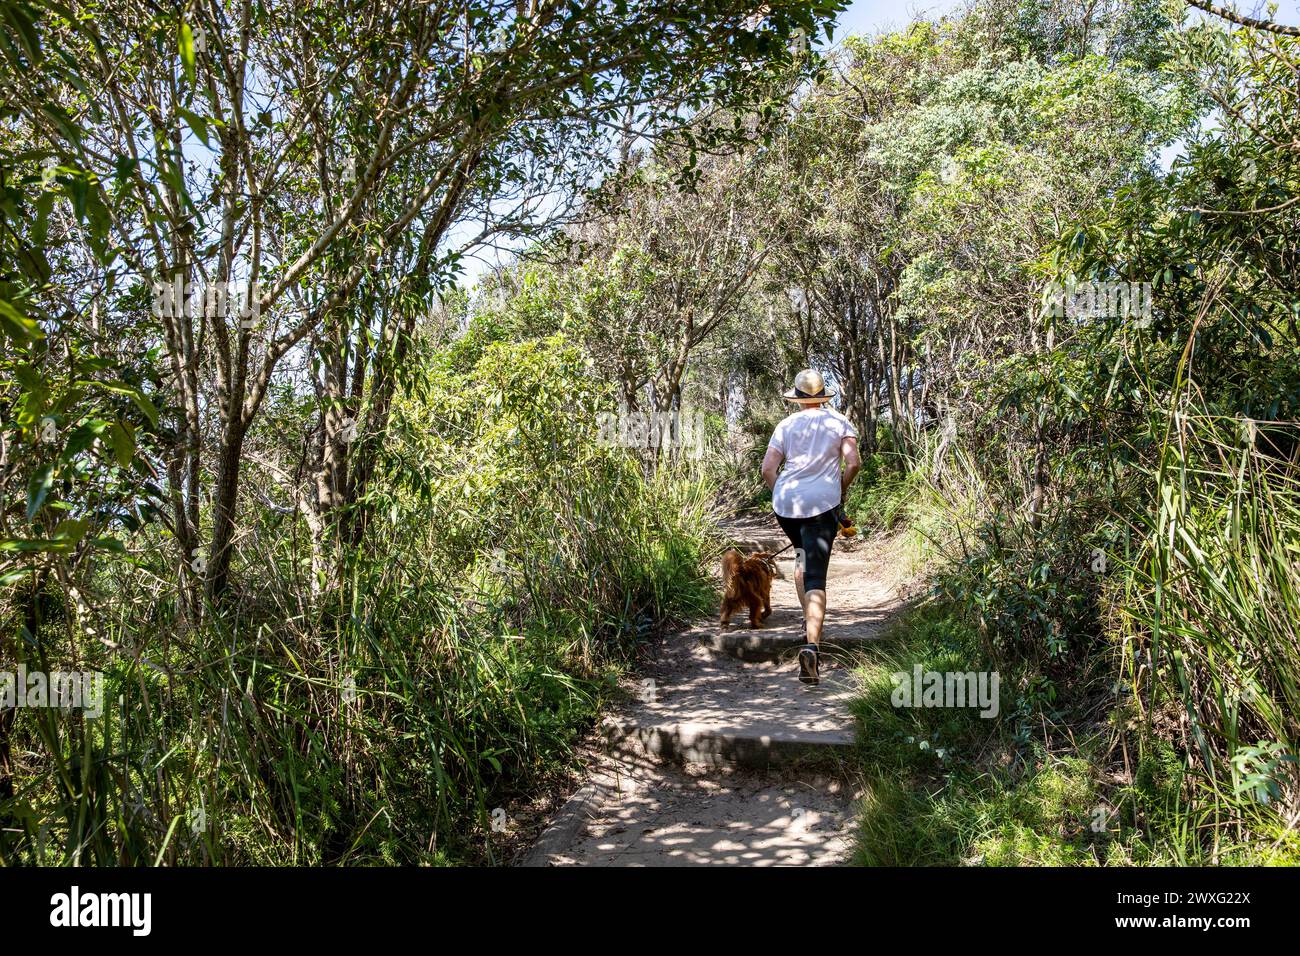 Sydney northern beaches region, model release woman walking pet dog along bicentennial coastal path on Bilgola South headland,NSW,Australia Stock Photo